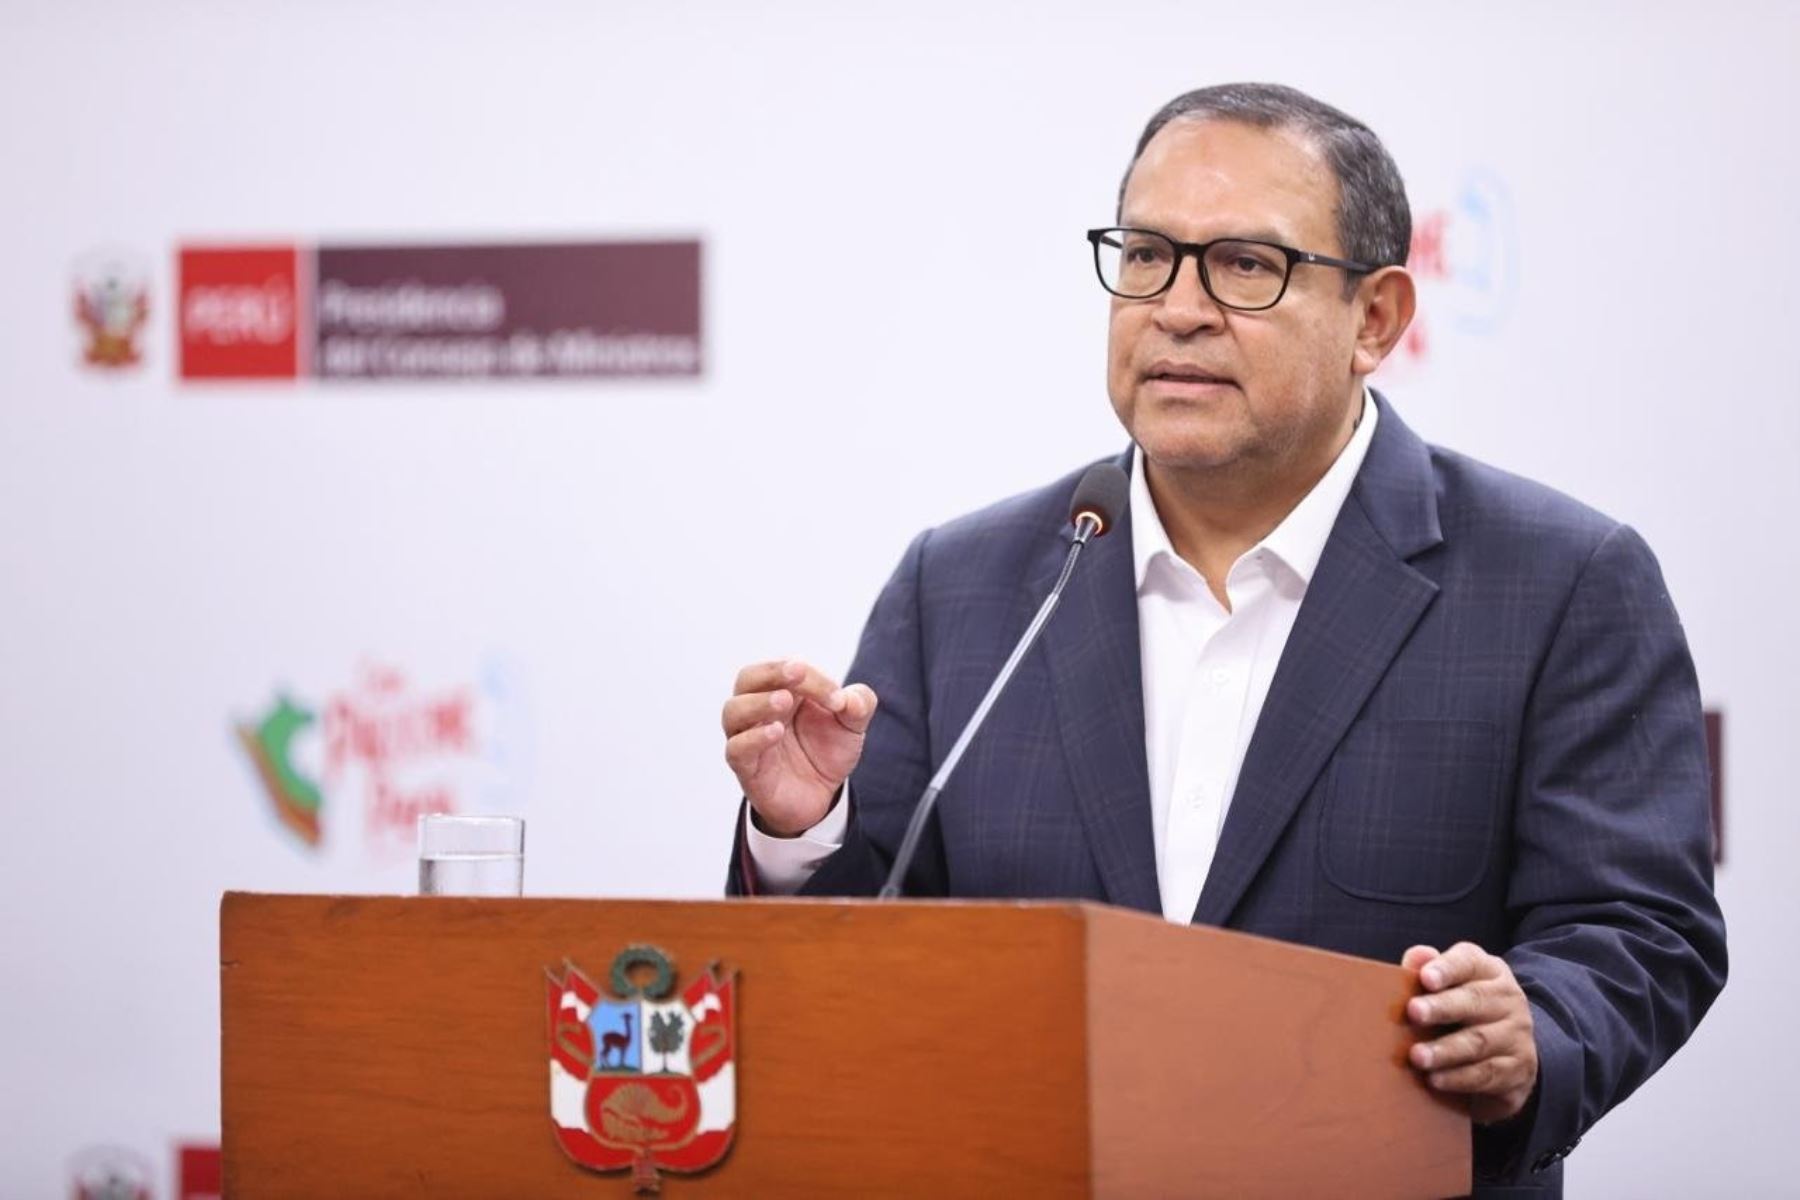 Peru: Alberto Otarola resigns as Prime Minister